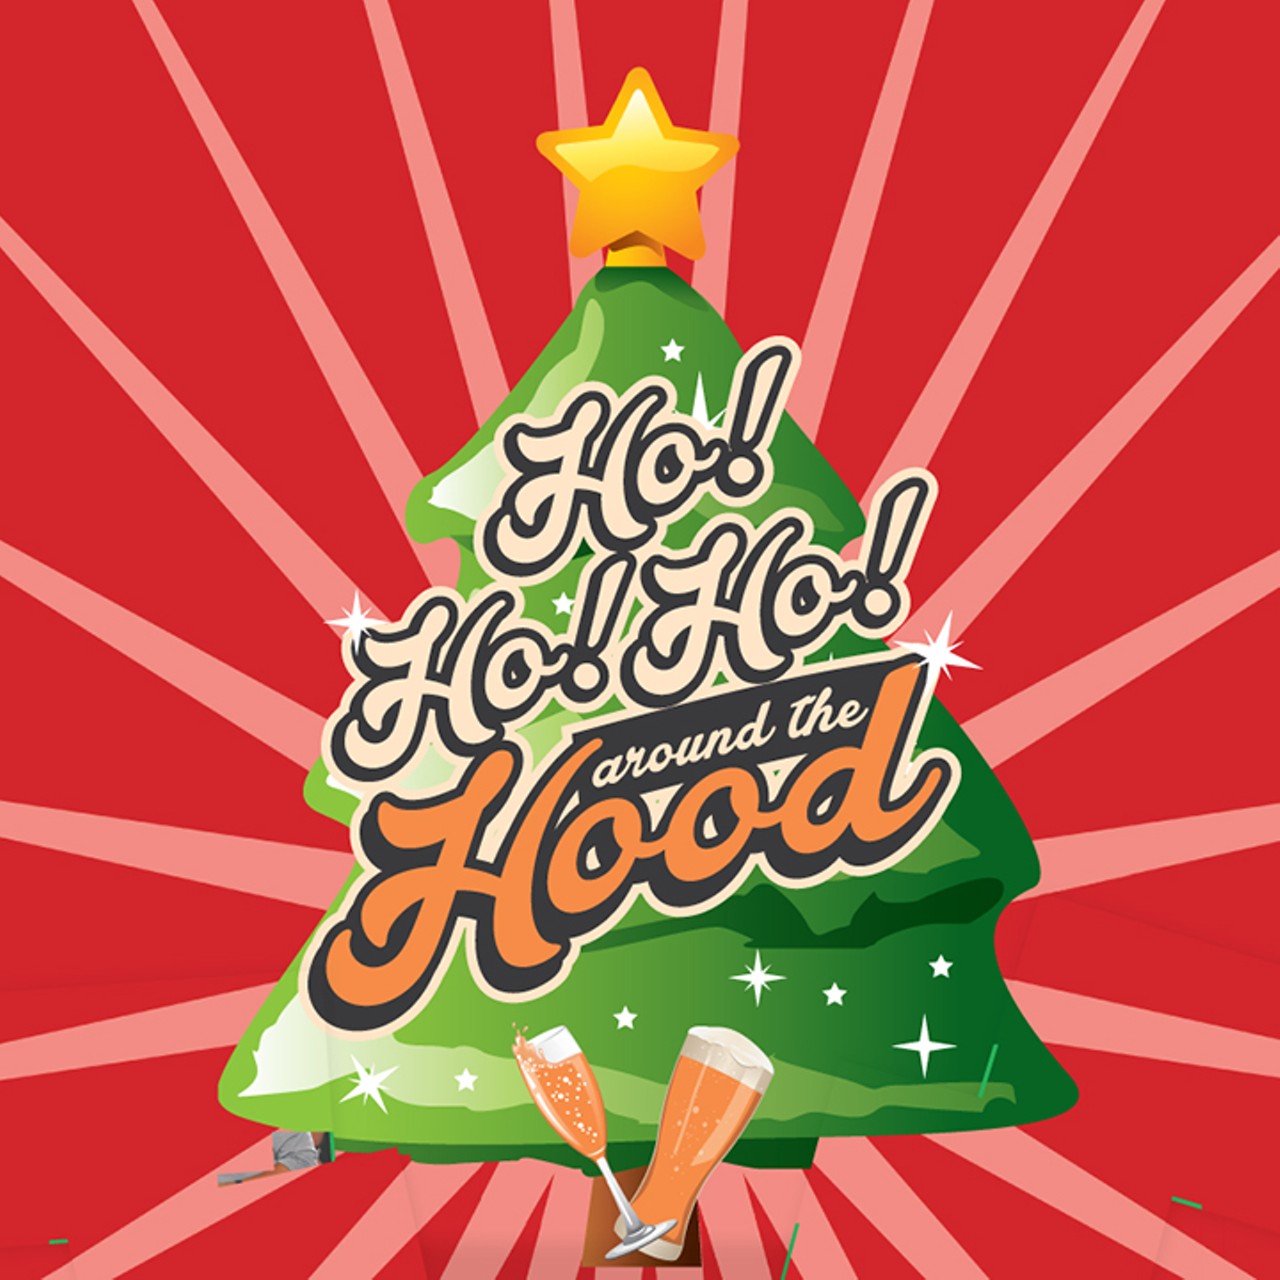 Wednesday, Dec. 14Ho! Ho! Ho! Around the Hood in Ivanhoe Village